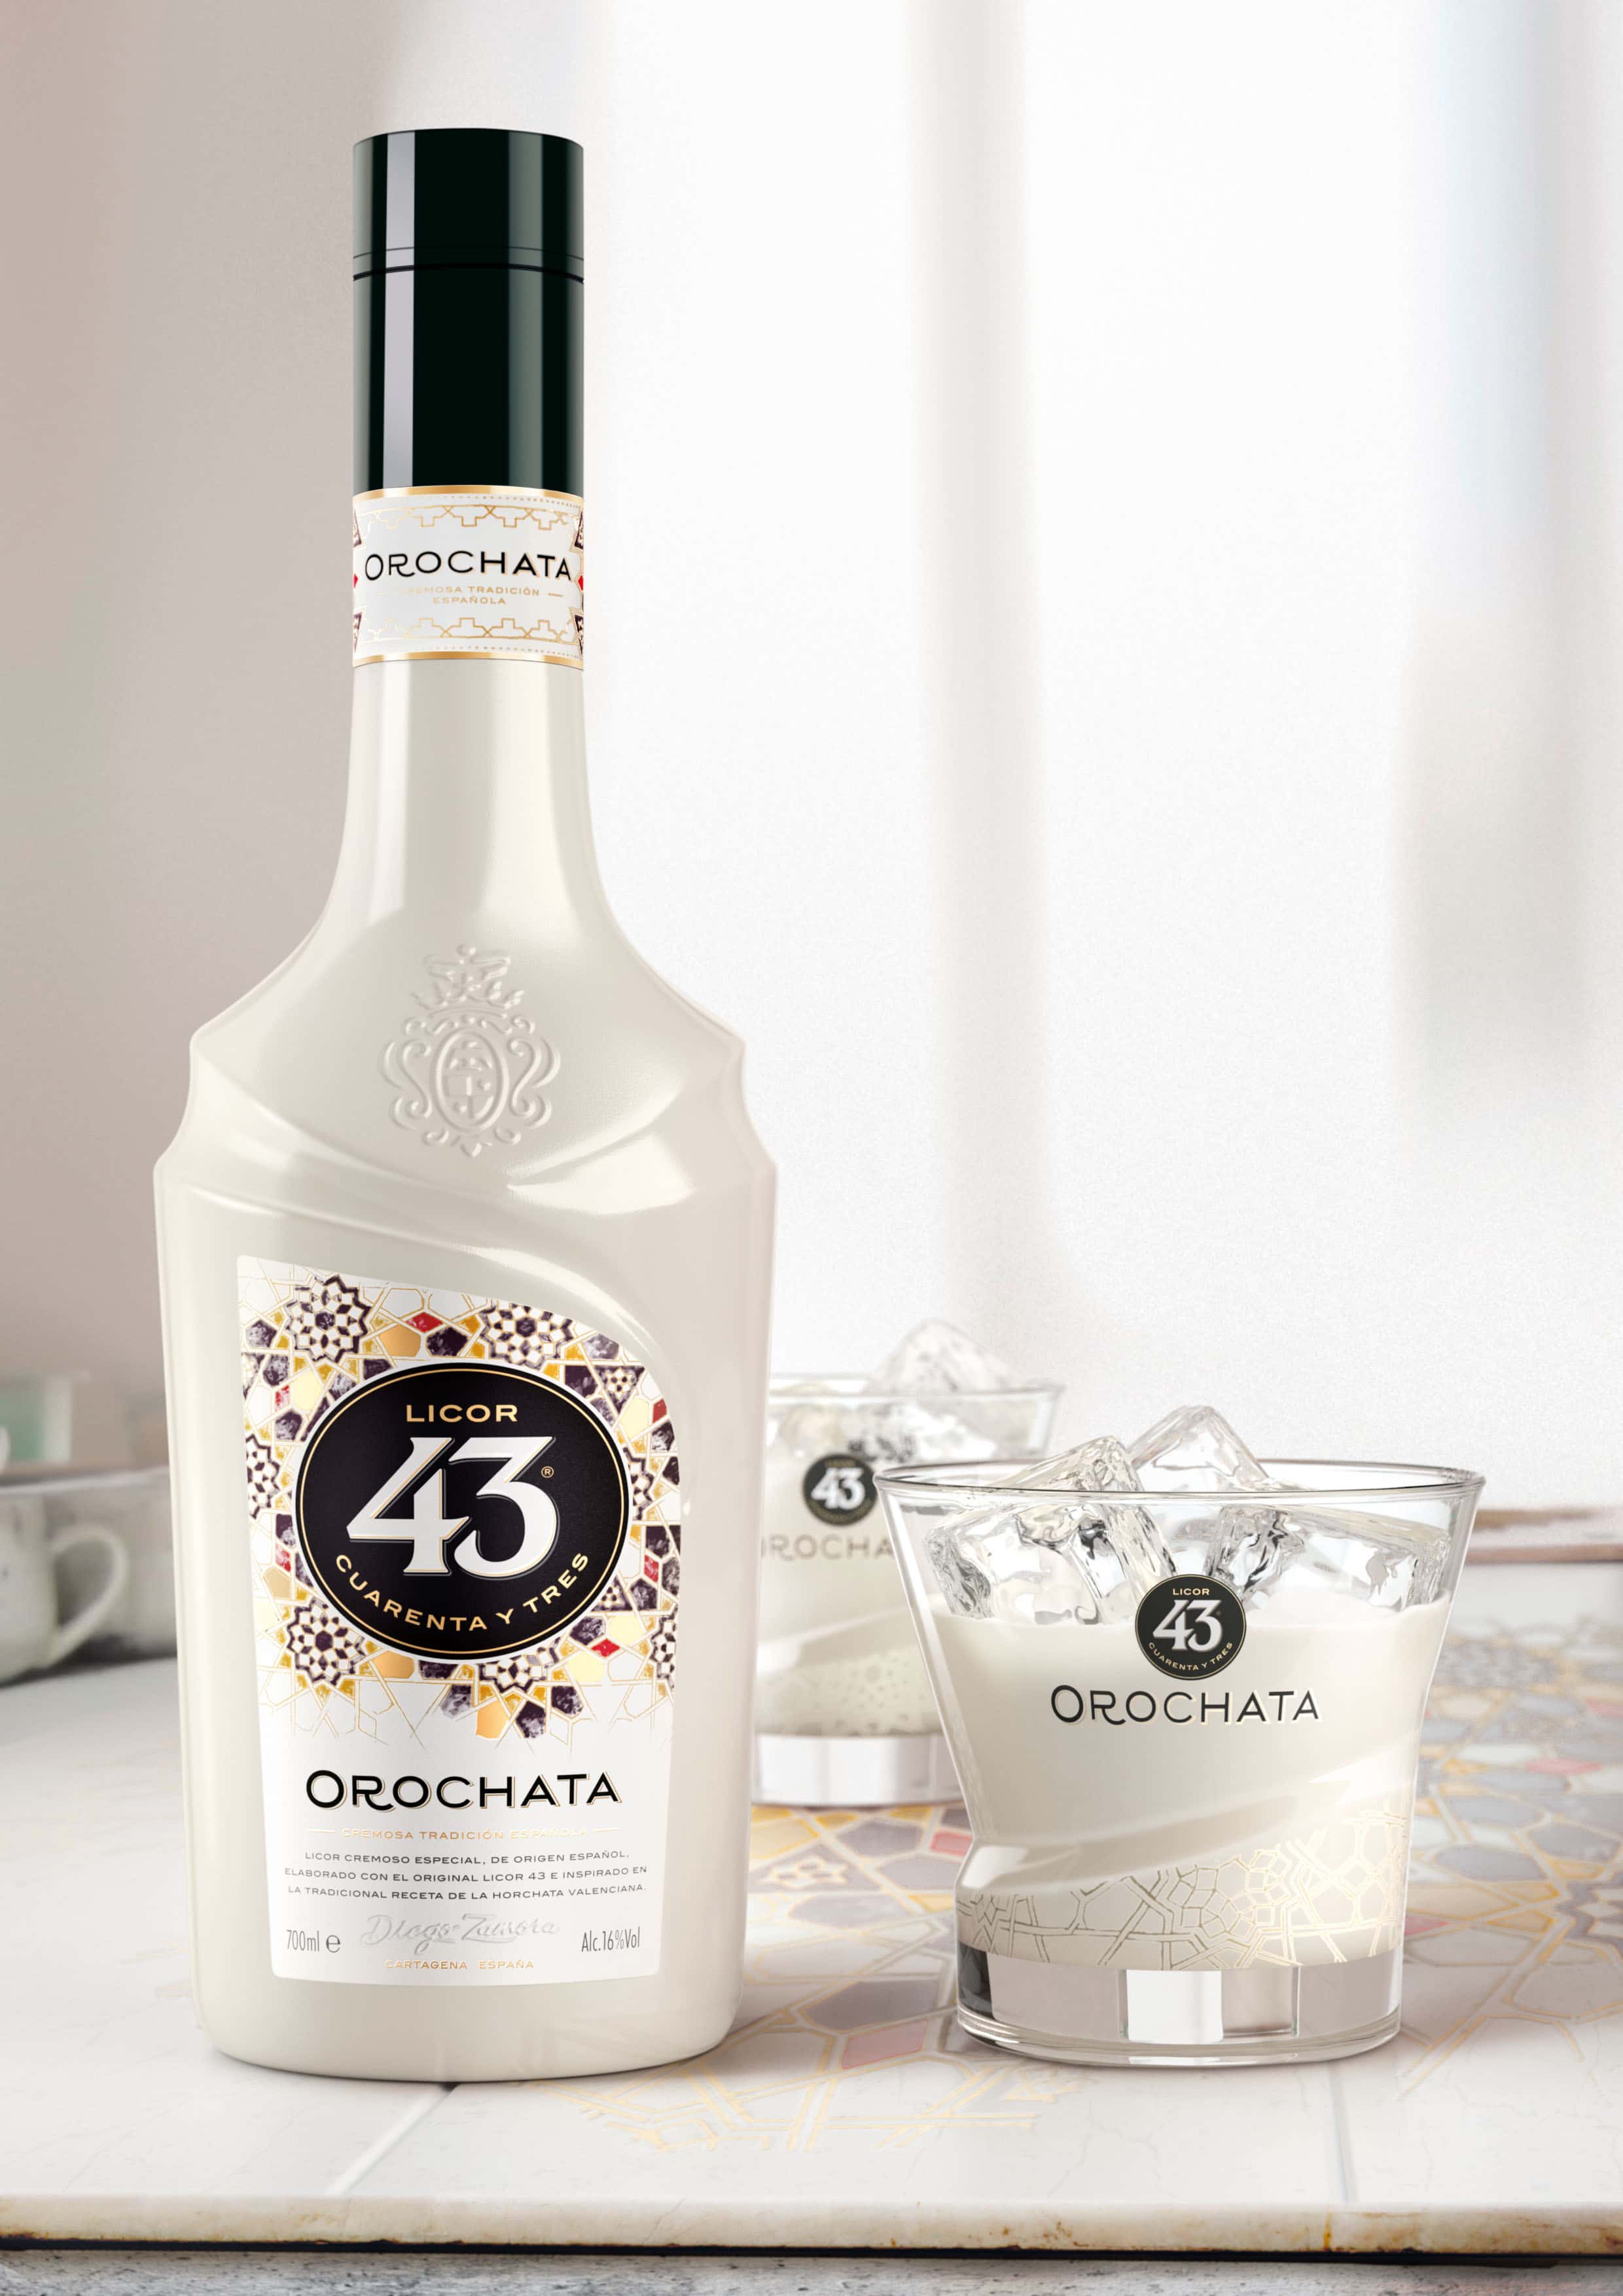 licor-43-orochata-flasche